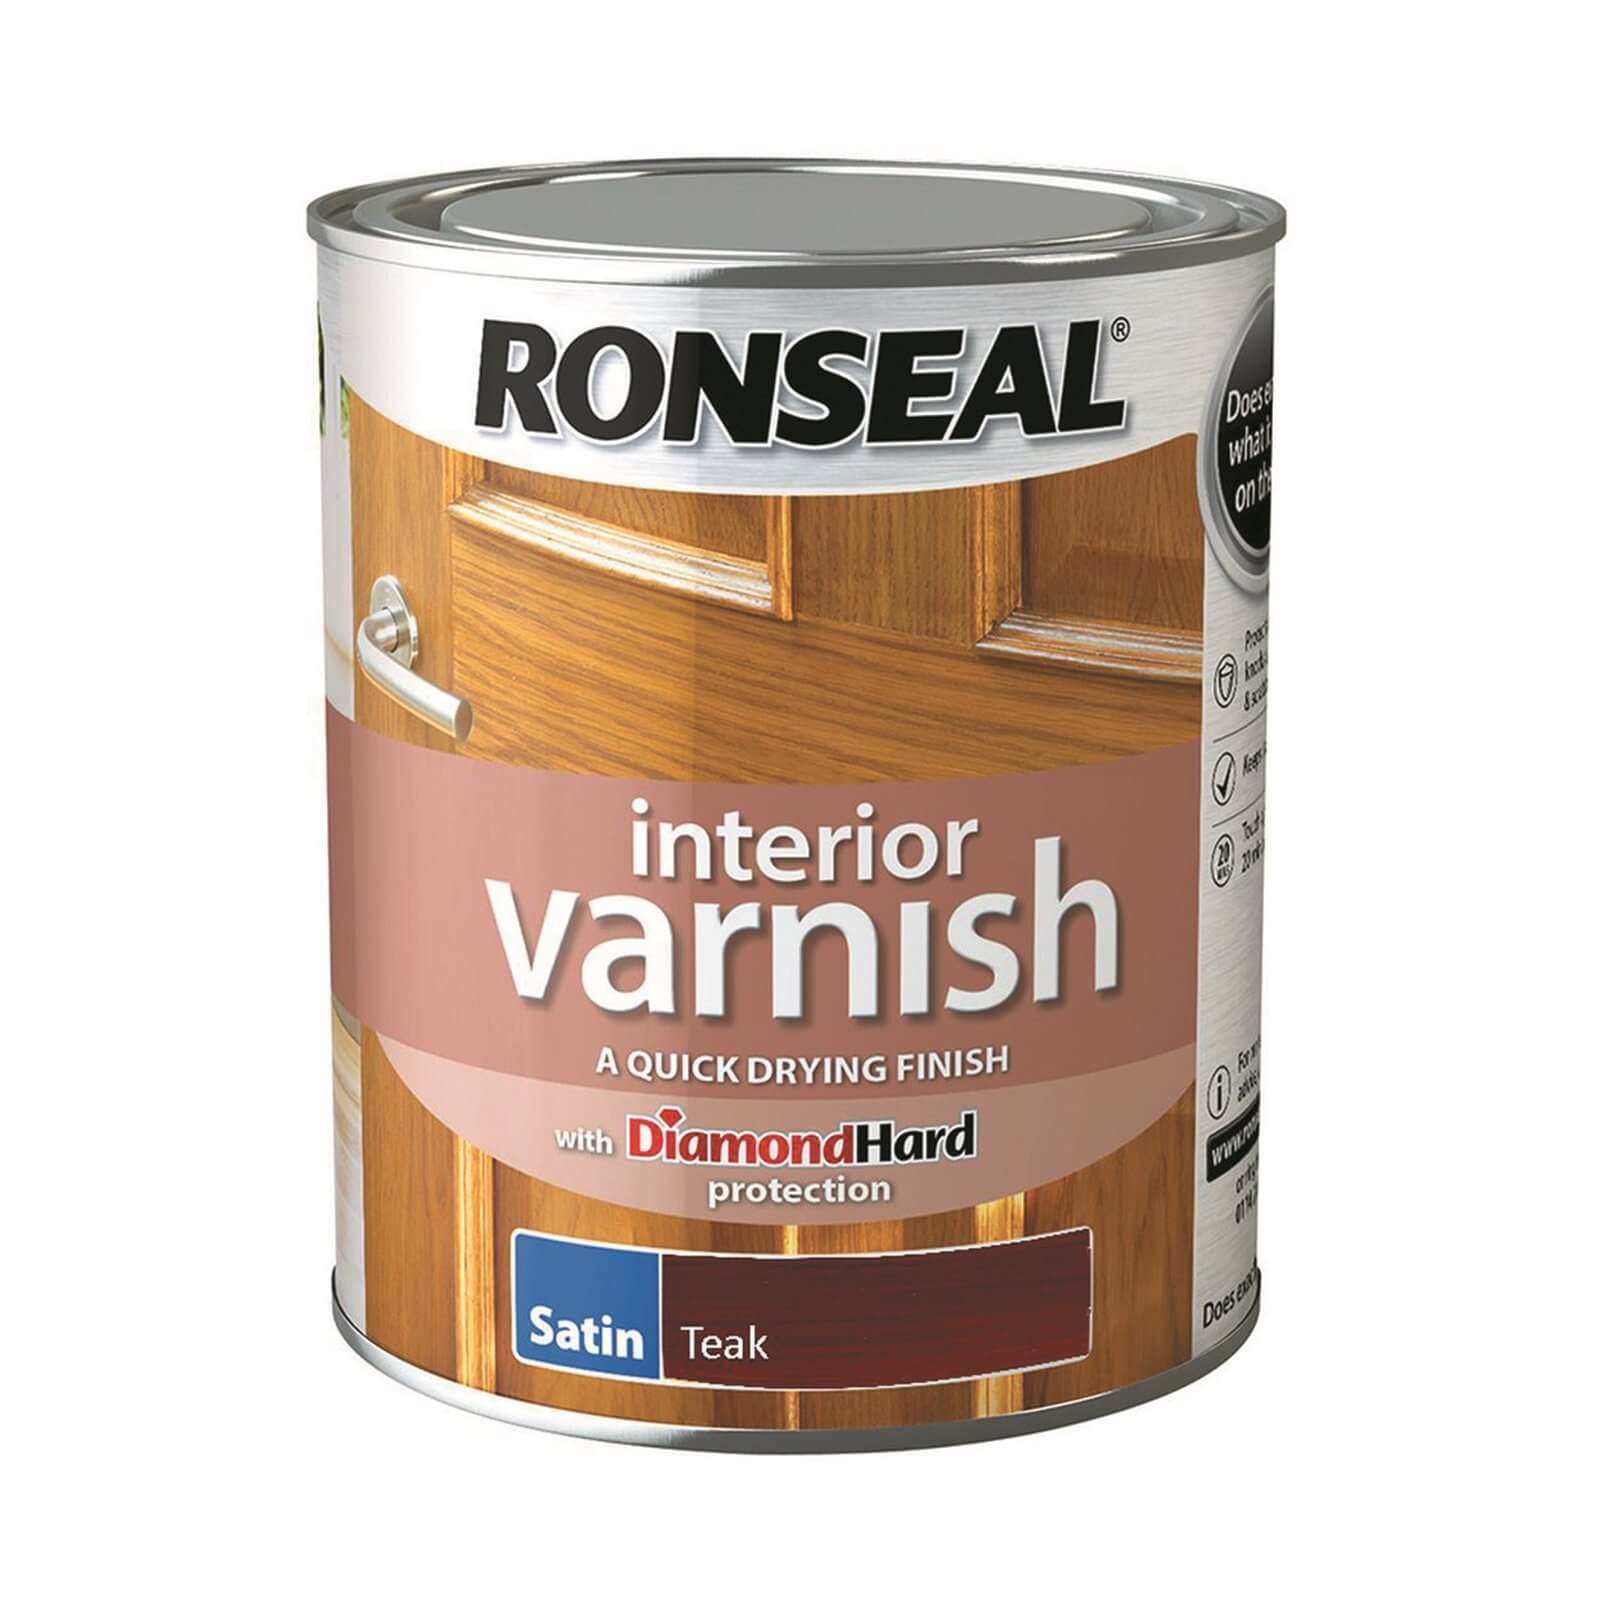 Ronseal Interior Varnish Satin Teak - 750ml